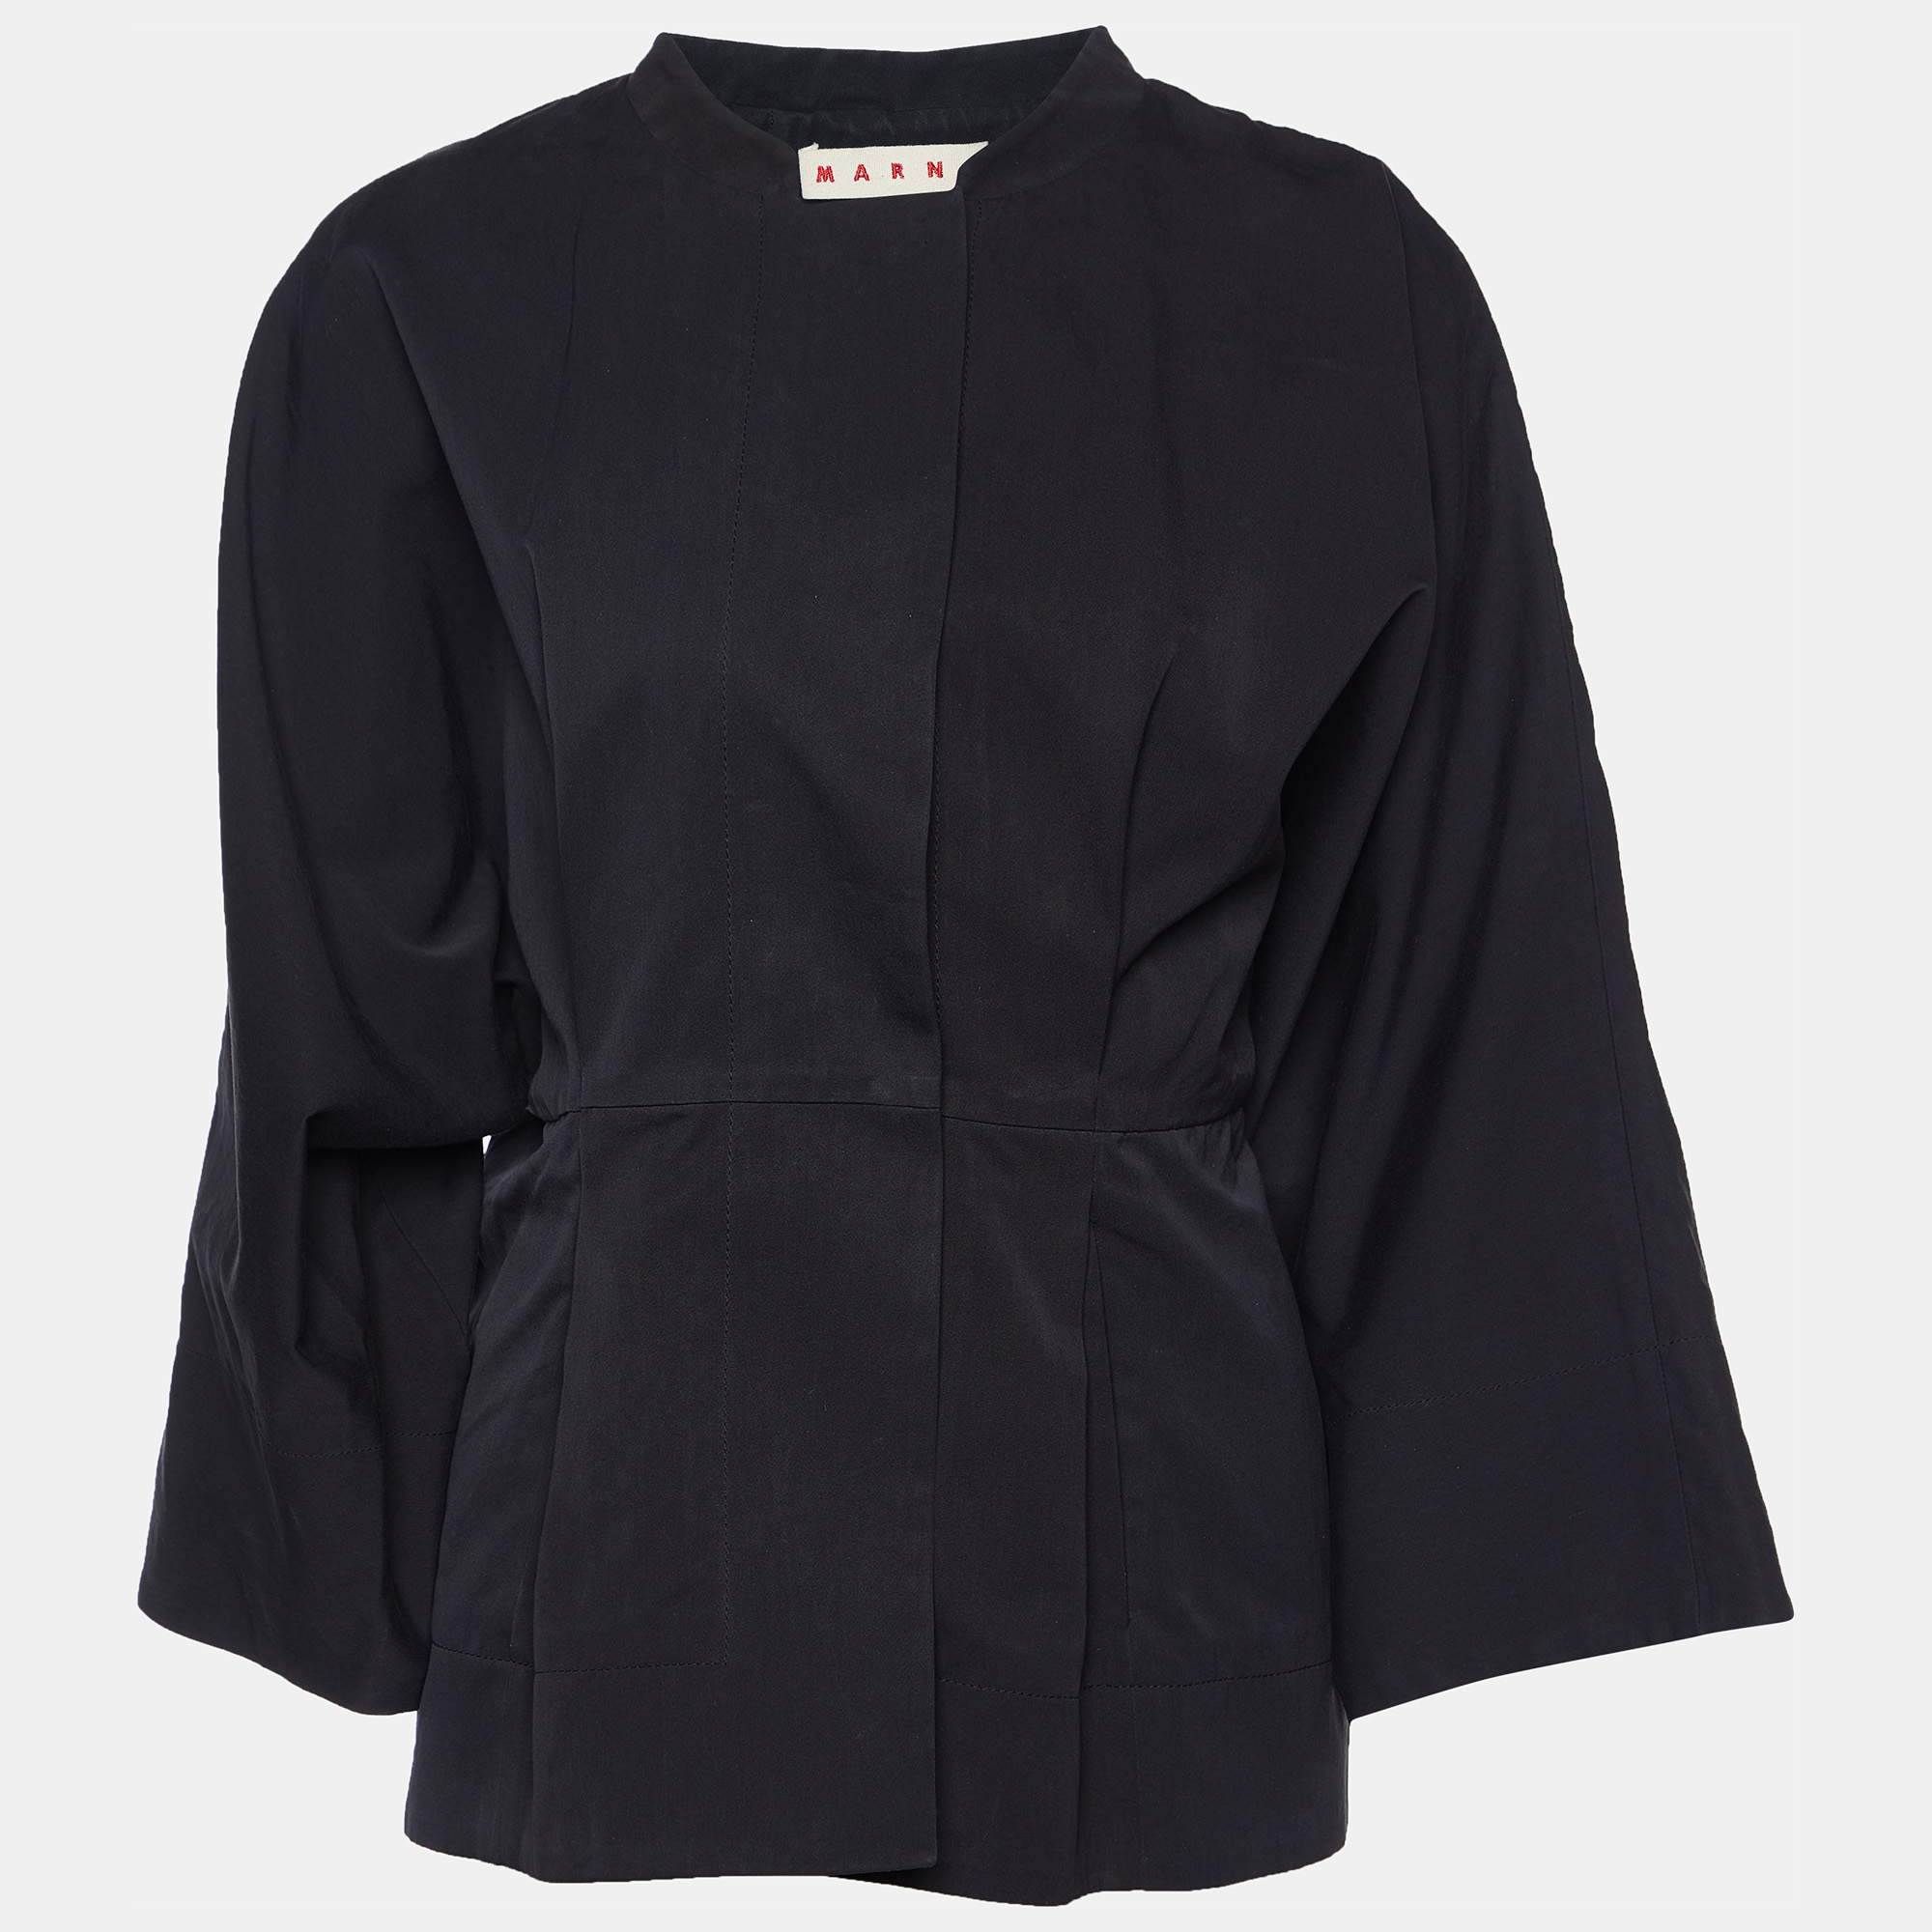 Marni black cotton & silk kimono sleeve jacket s